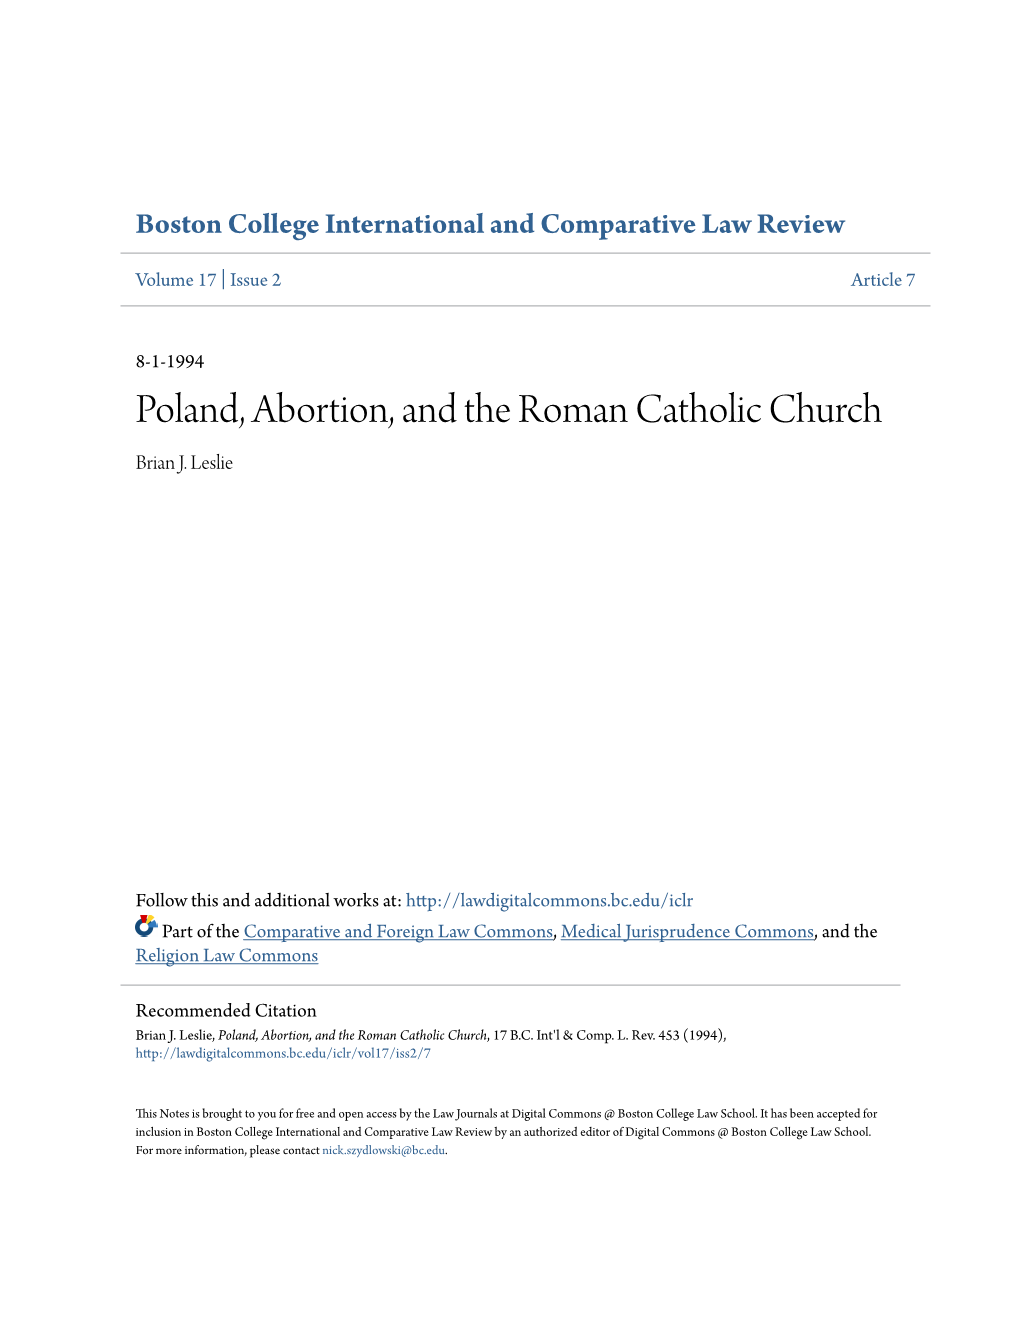 Poland, Abortion, and the Roman Catholic Church Brian J